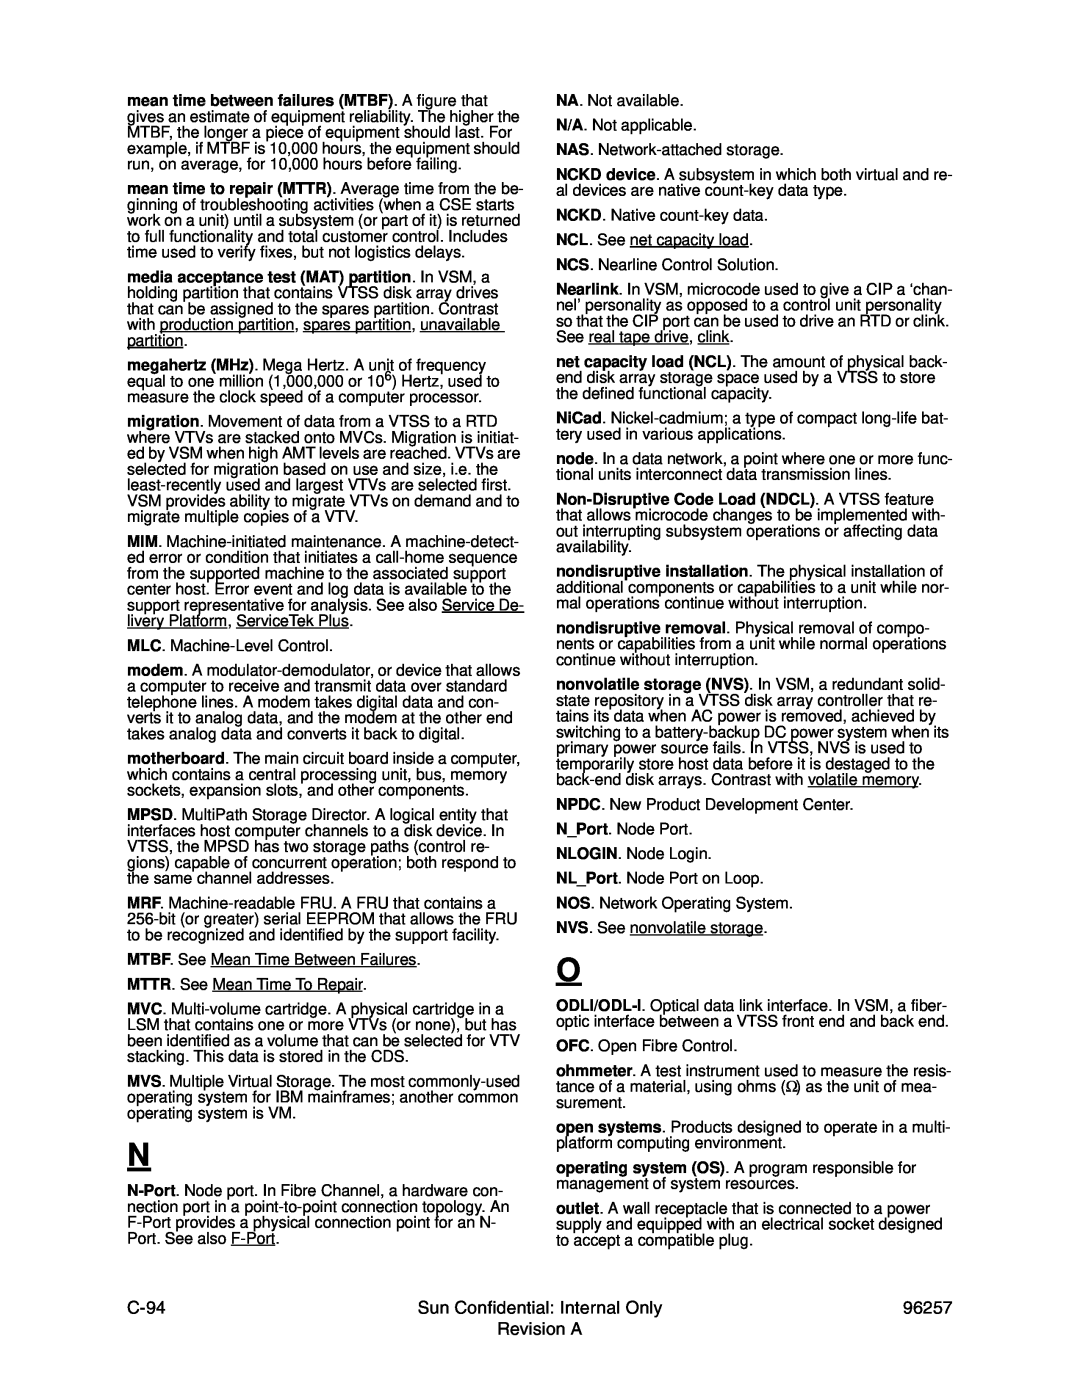 Sun Microsystems 96257 manual C-94, Sun Confidential Internal Only, Revision A 